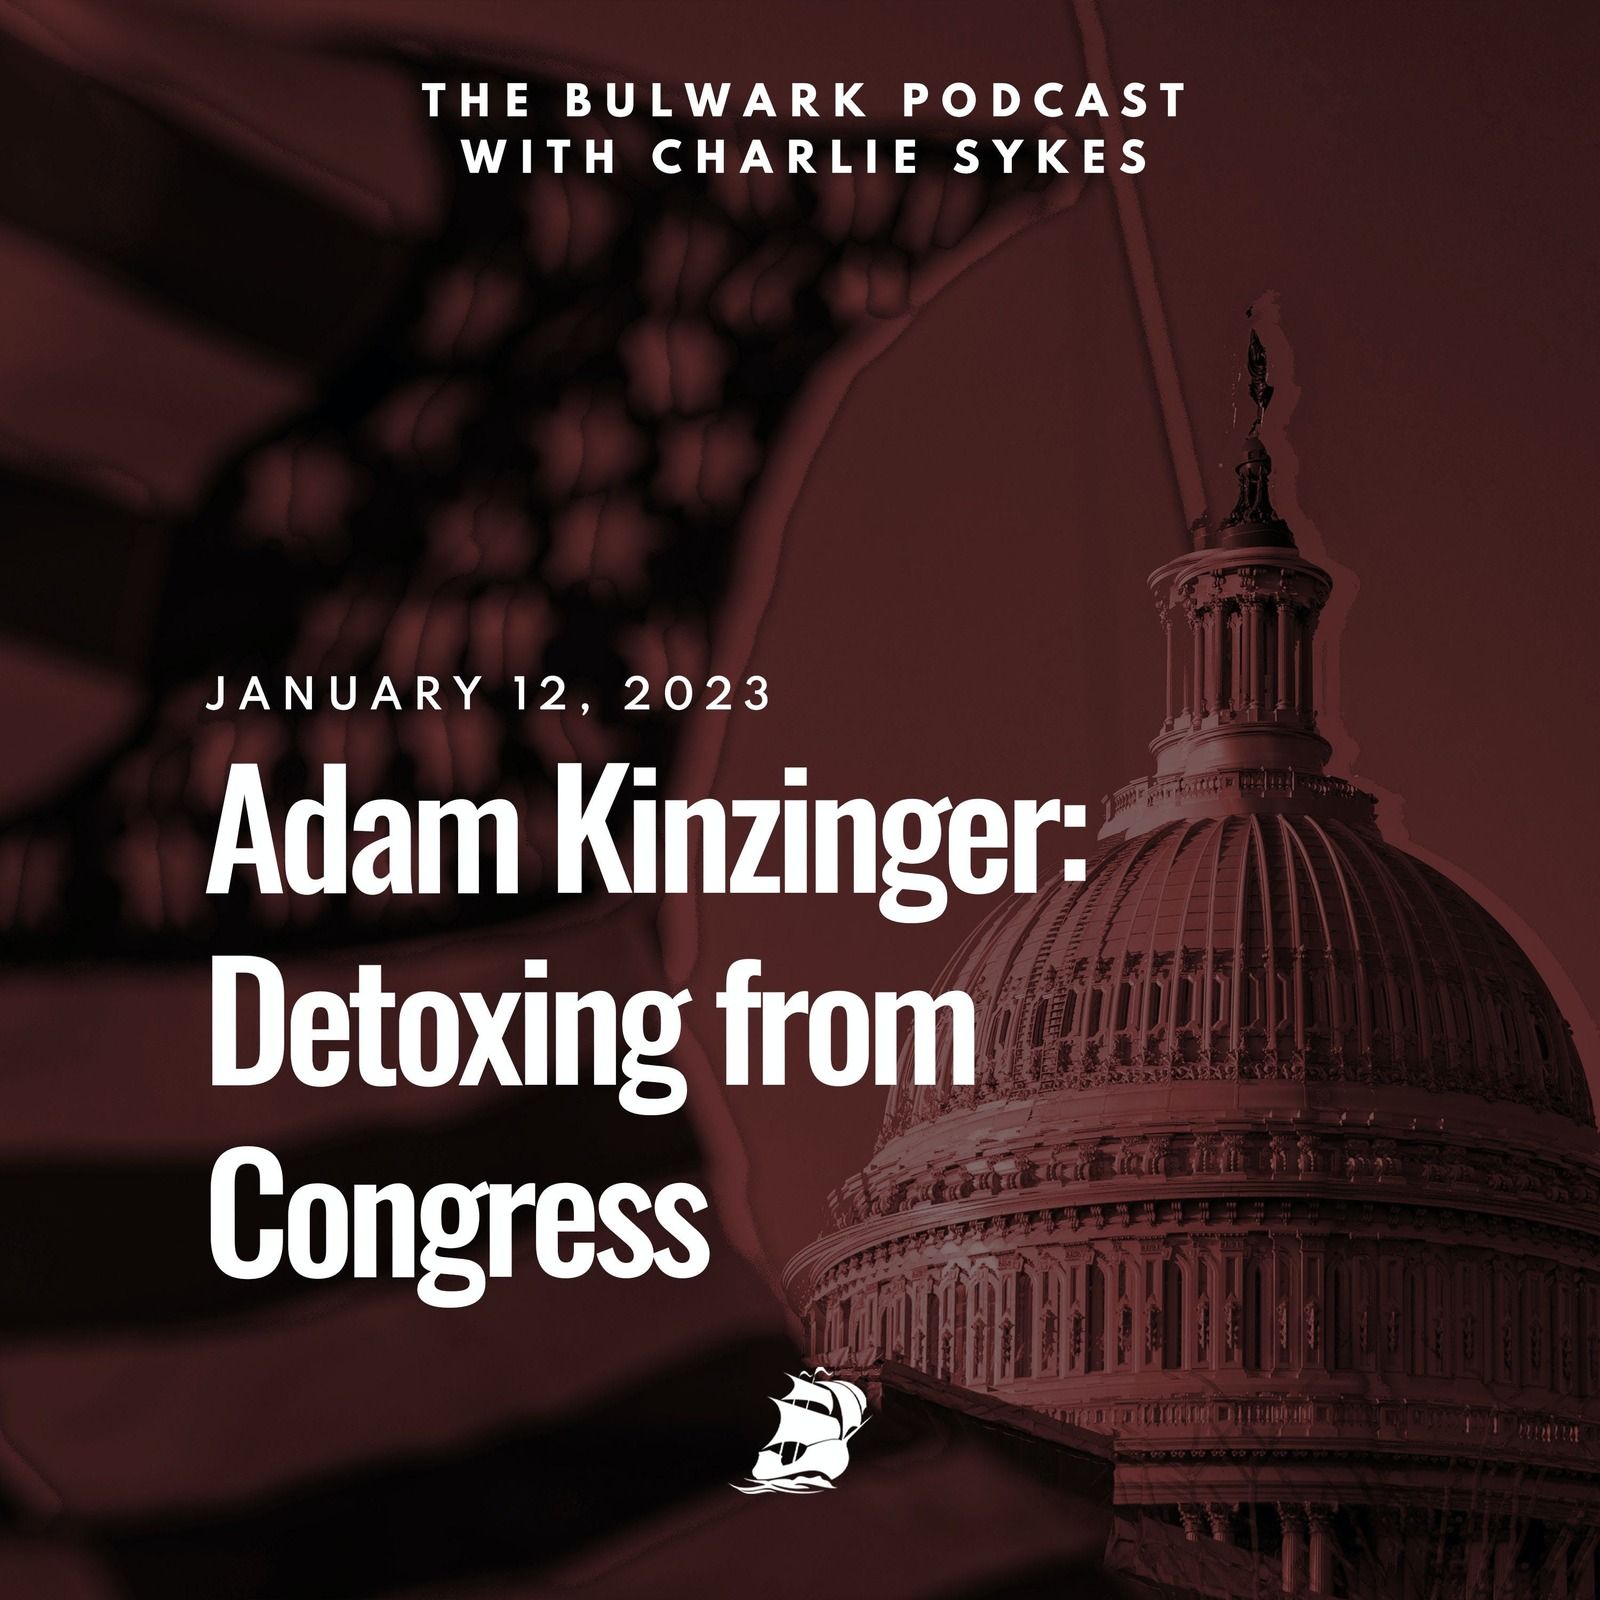 Adam Kinzinger: Detoxing from Congress by The Bulwark Podcast